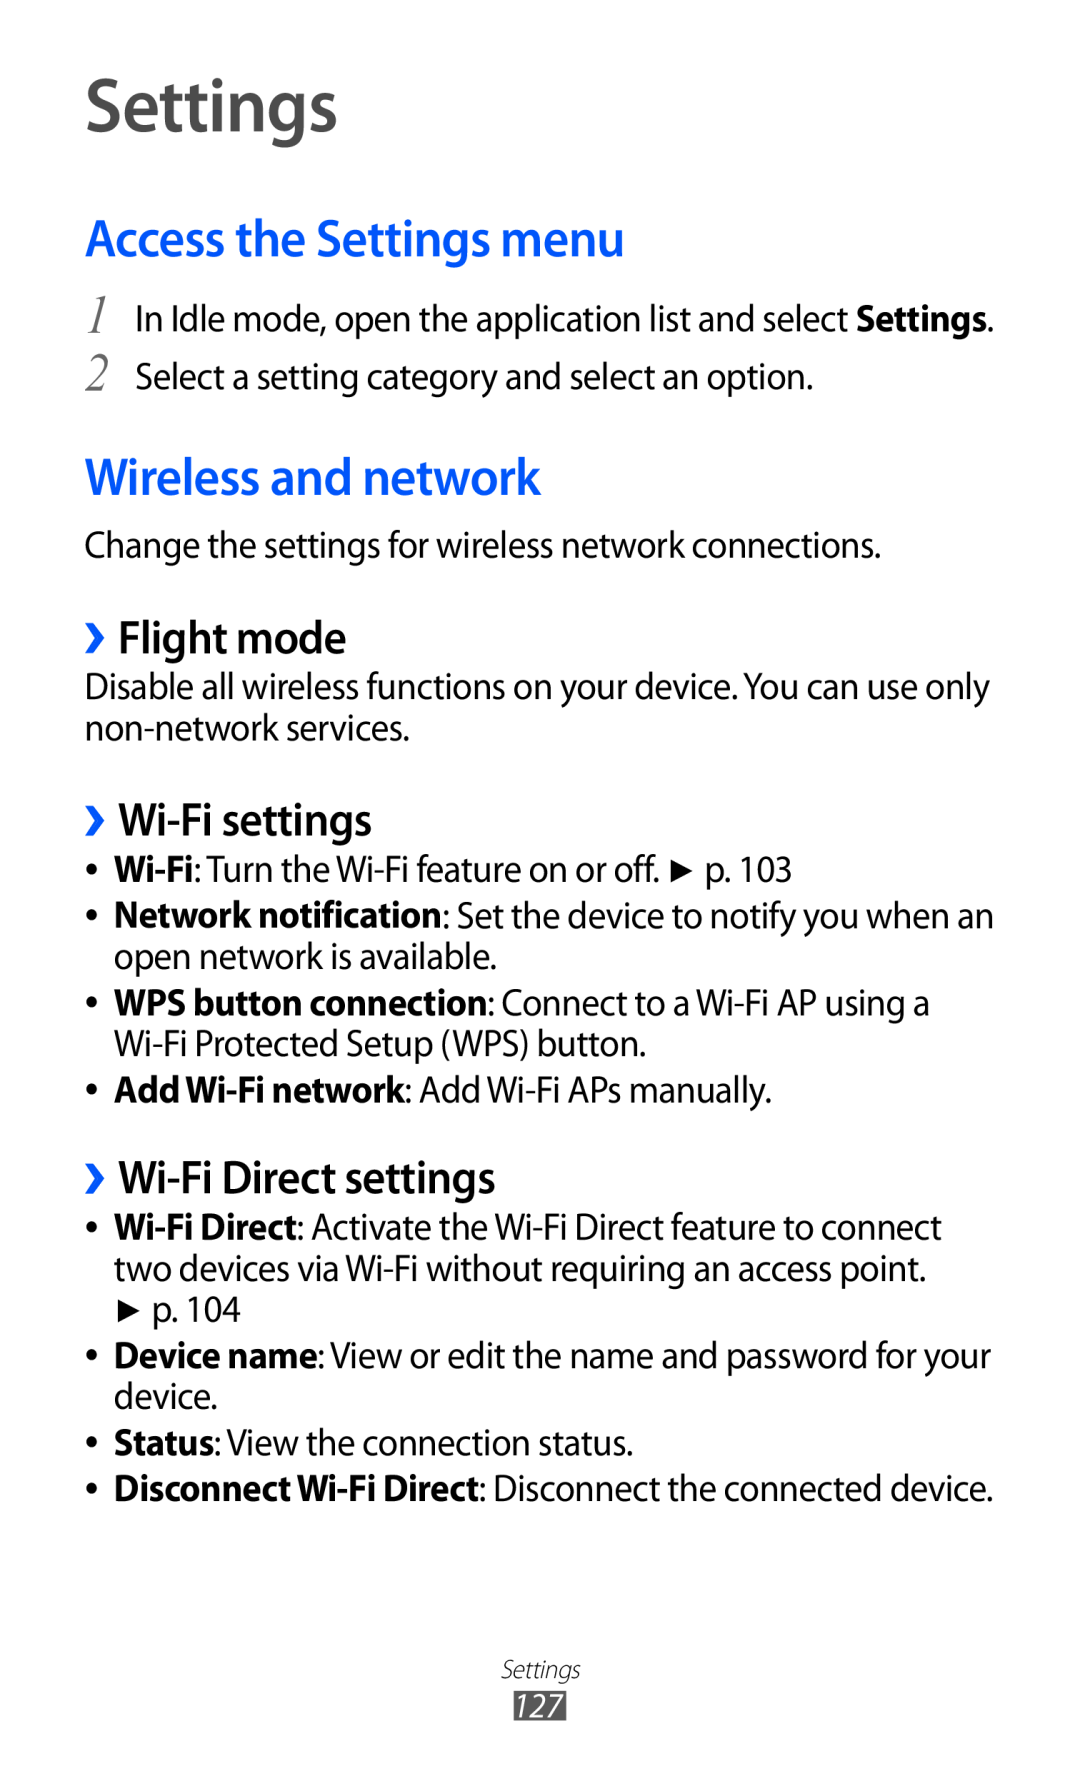 Samsung GT-I9070HKAJED, GT-I9070RWAJED Access the Settings menu, Wireless and network, ››Flight mode, ››Wi-Fi settings 